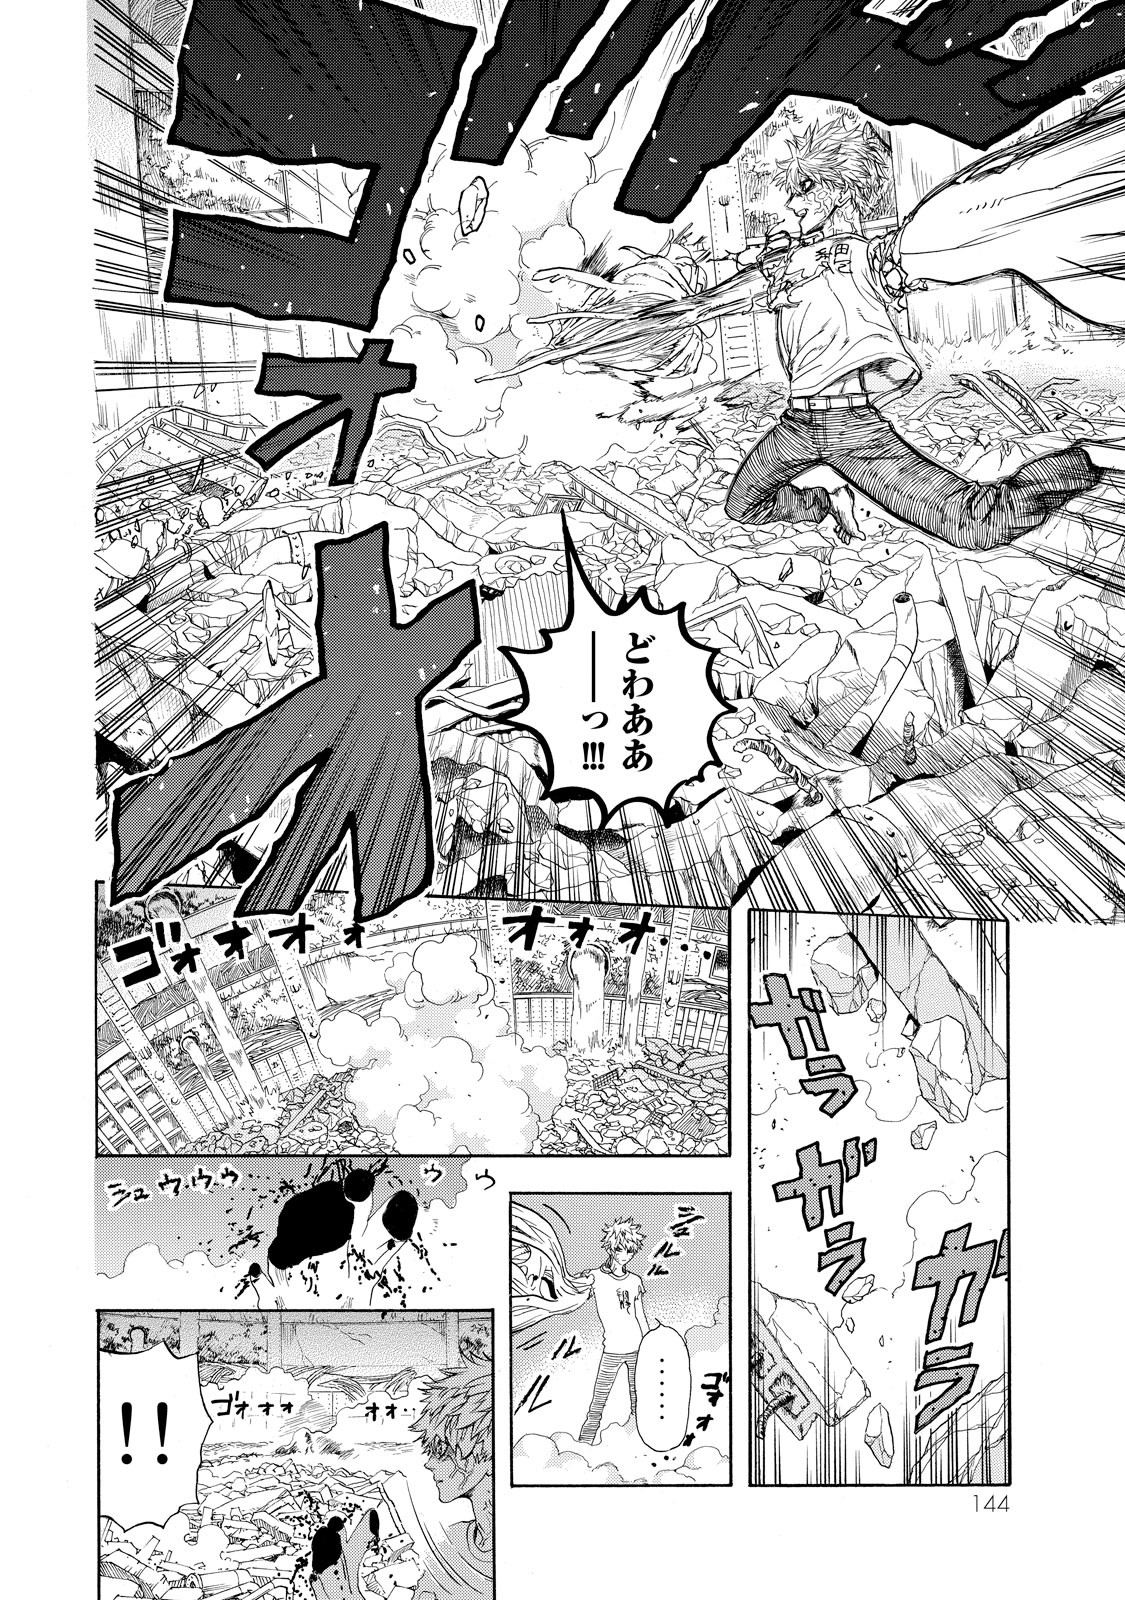 Hataraku Saibou - Chapter 24 - Page 4